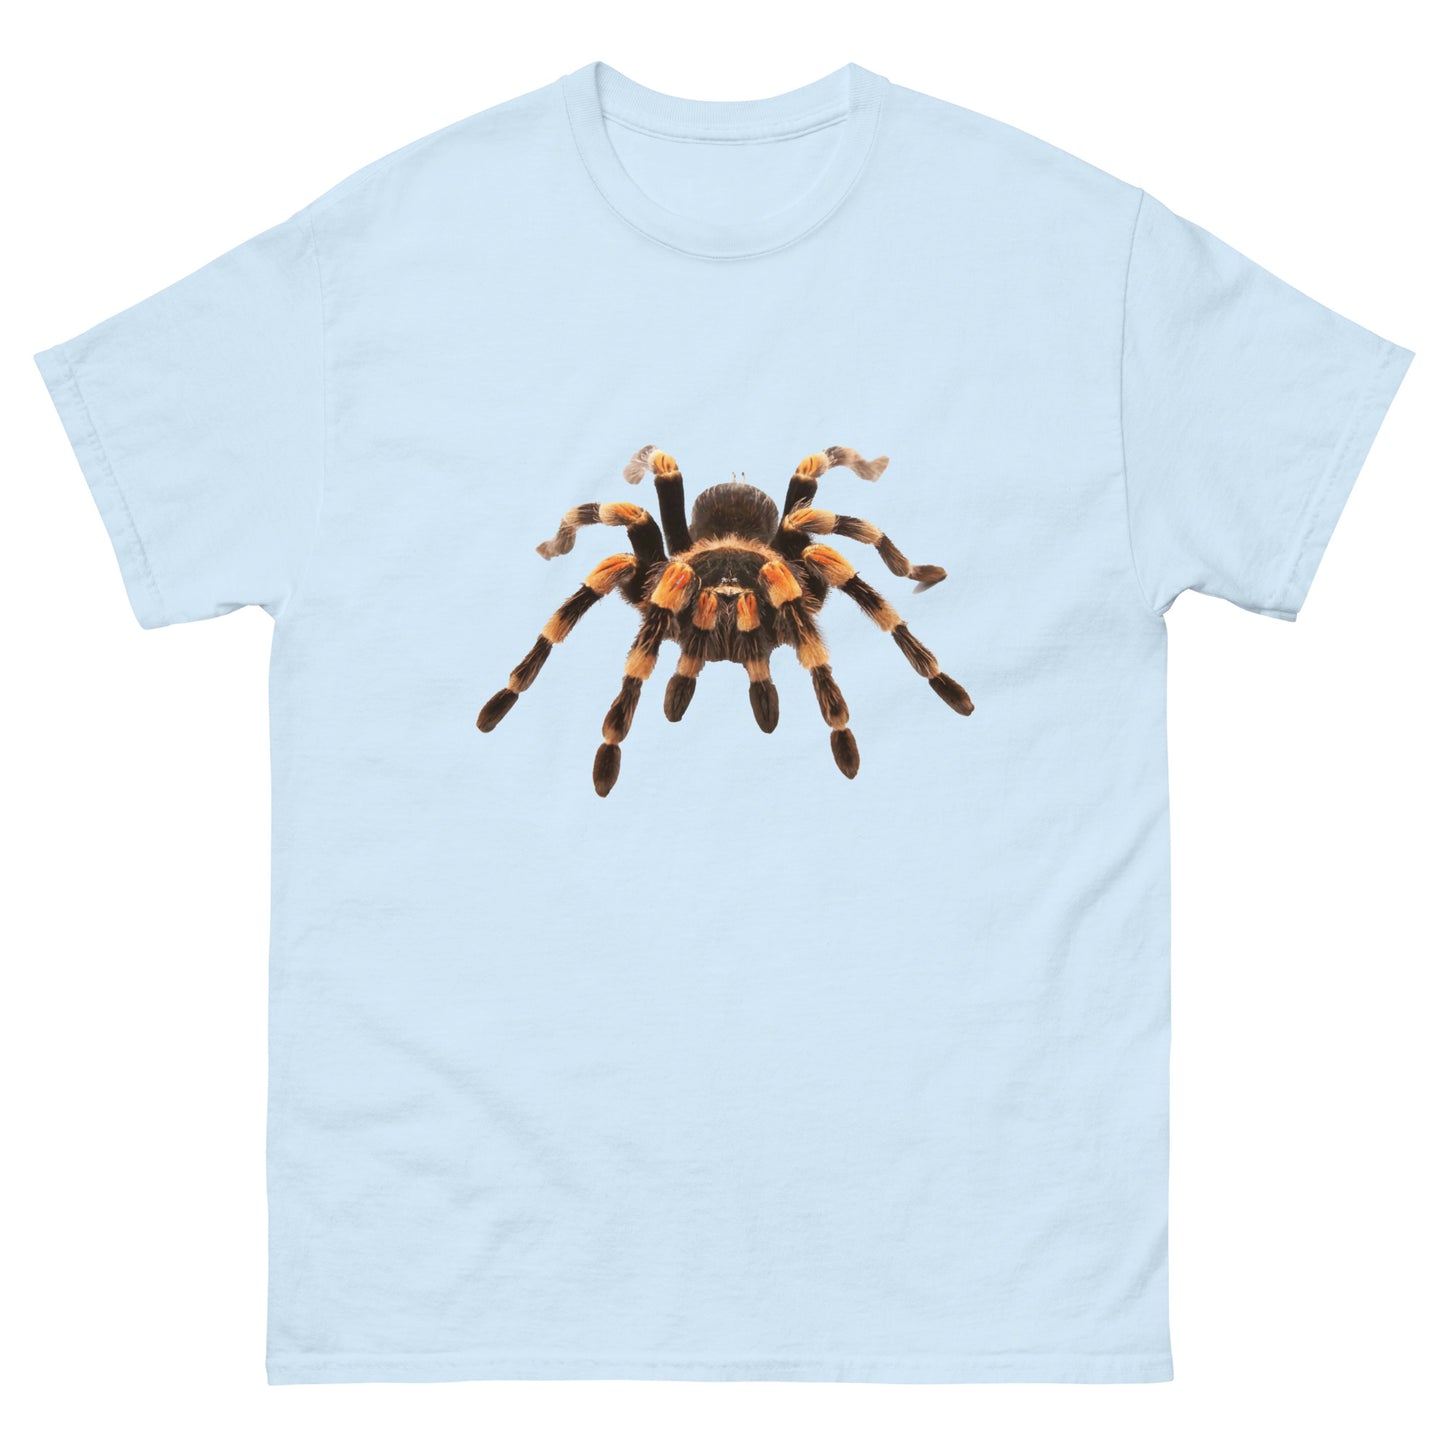 Mens classic t-shirt printed with a Tarantula Spider